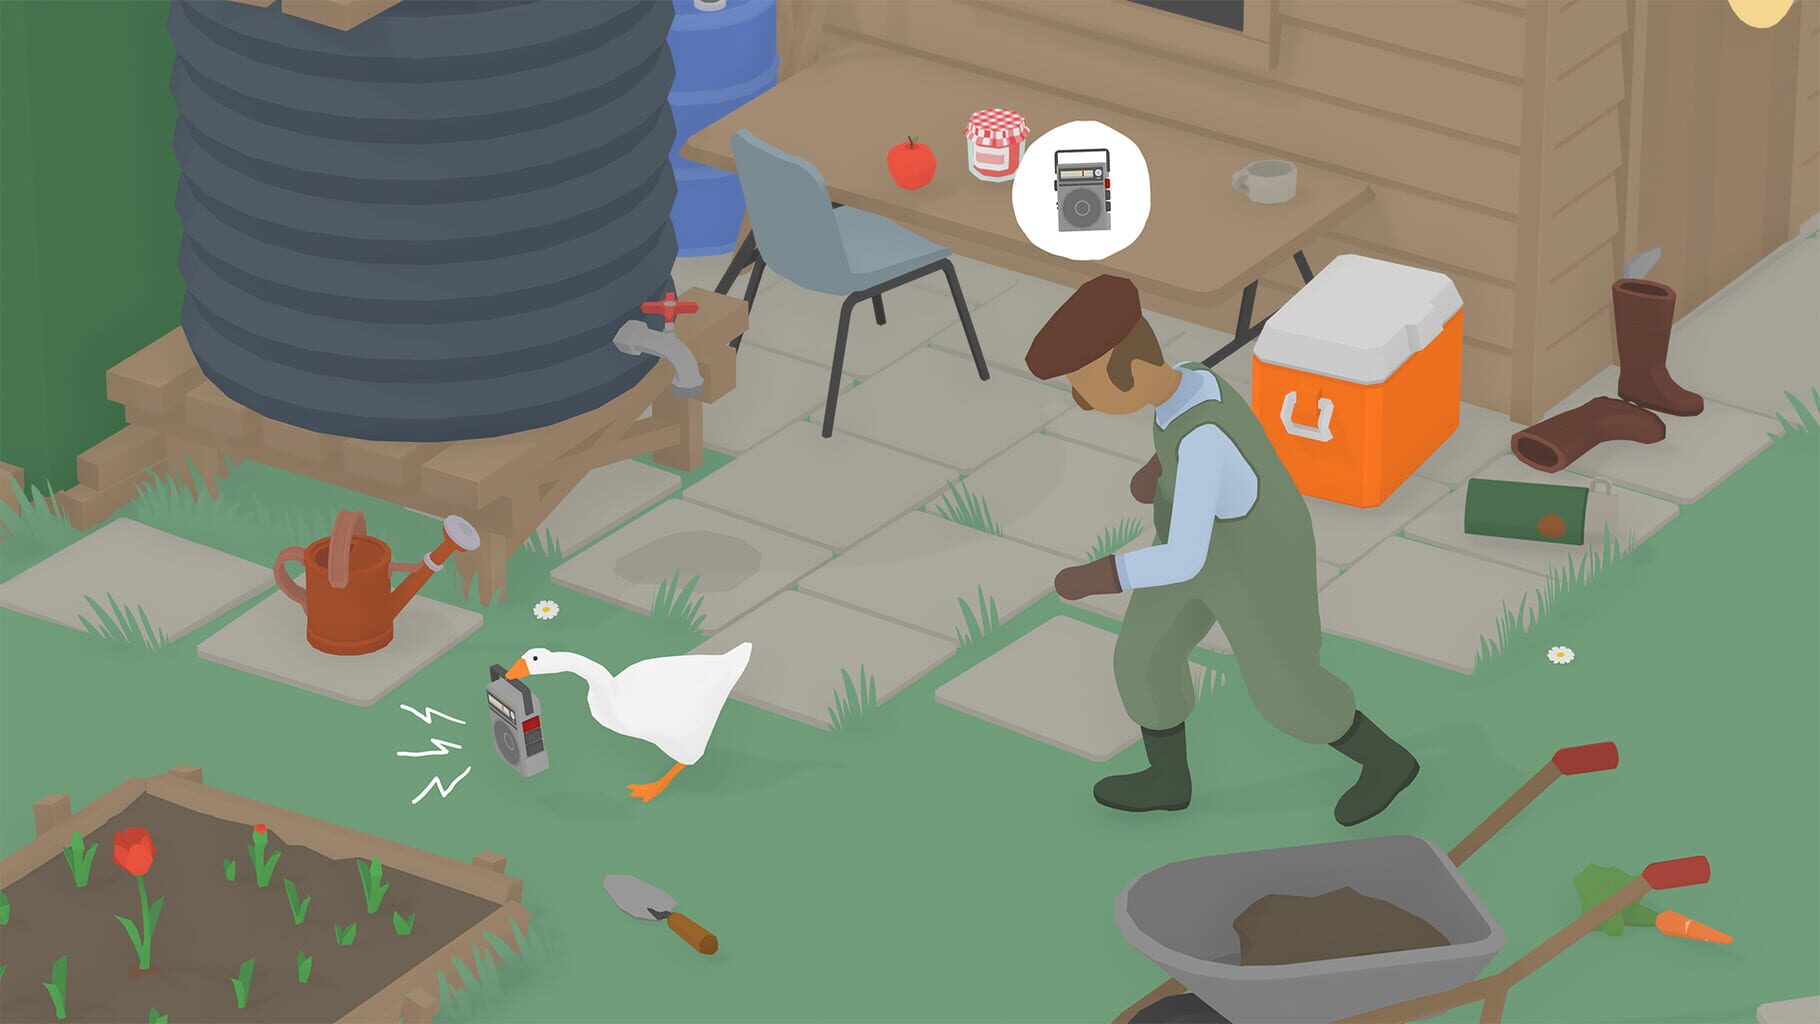 Untitled Goose Game screenshots